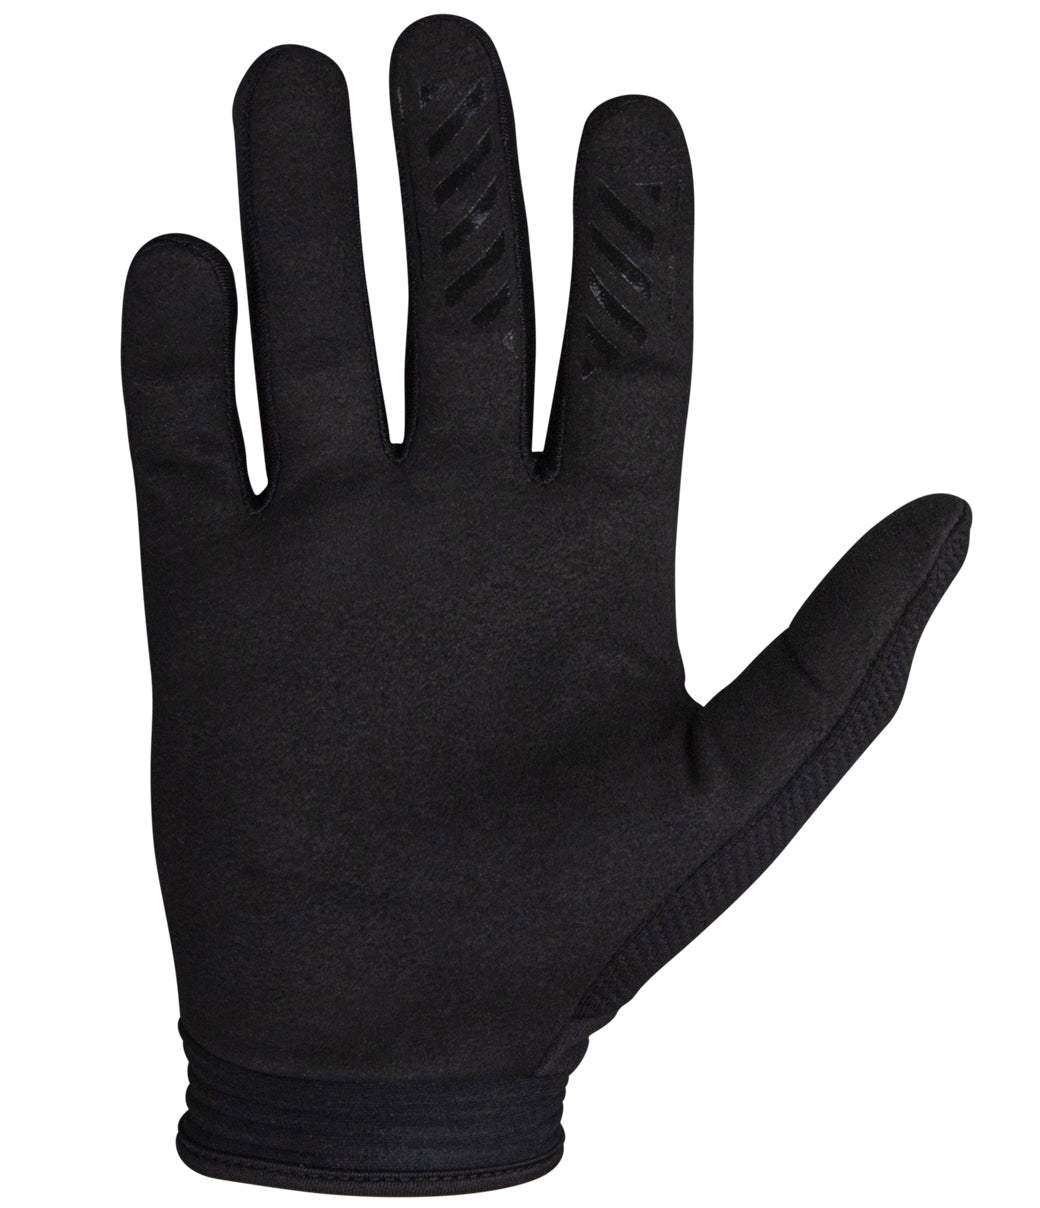 Endure Glove - Black/Black